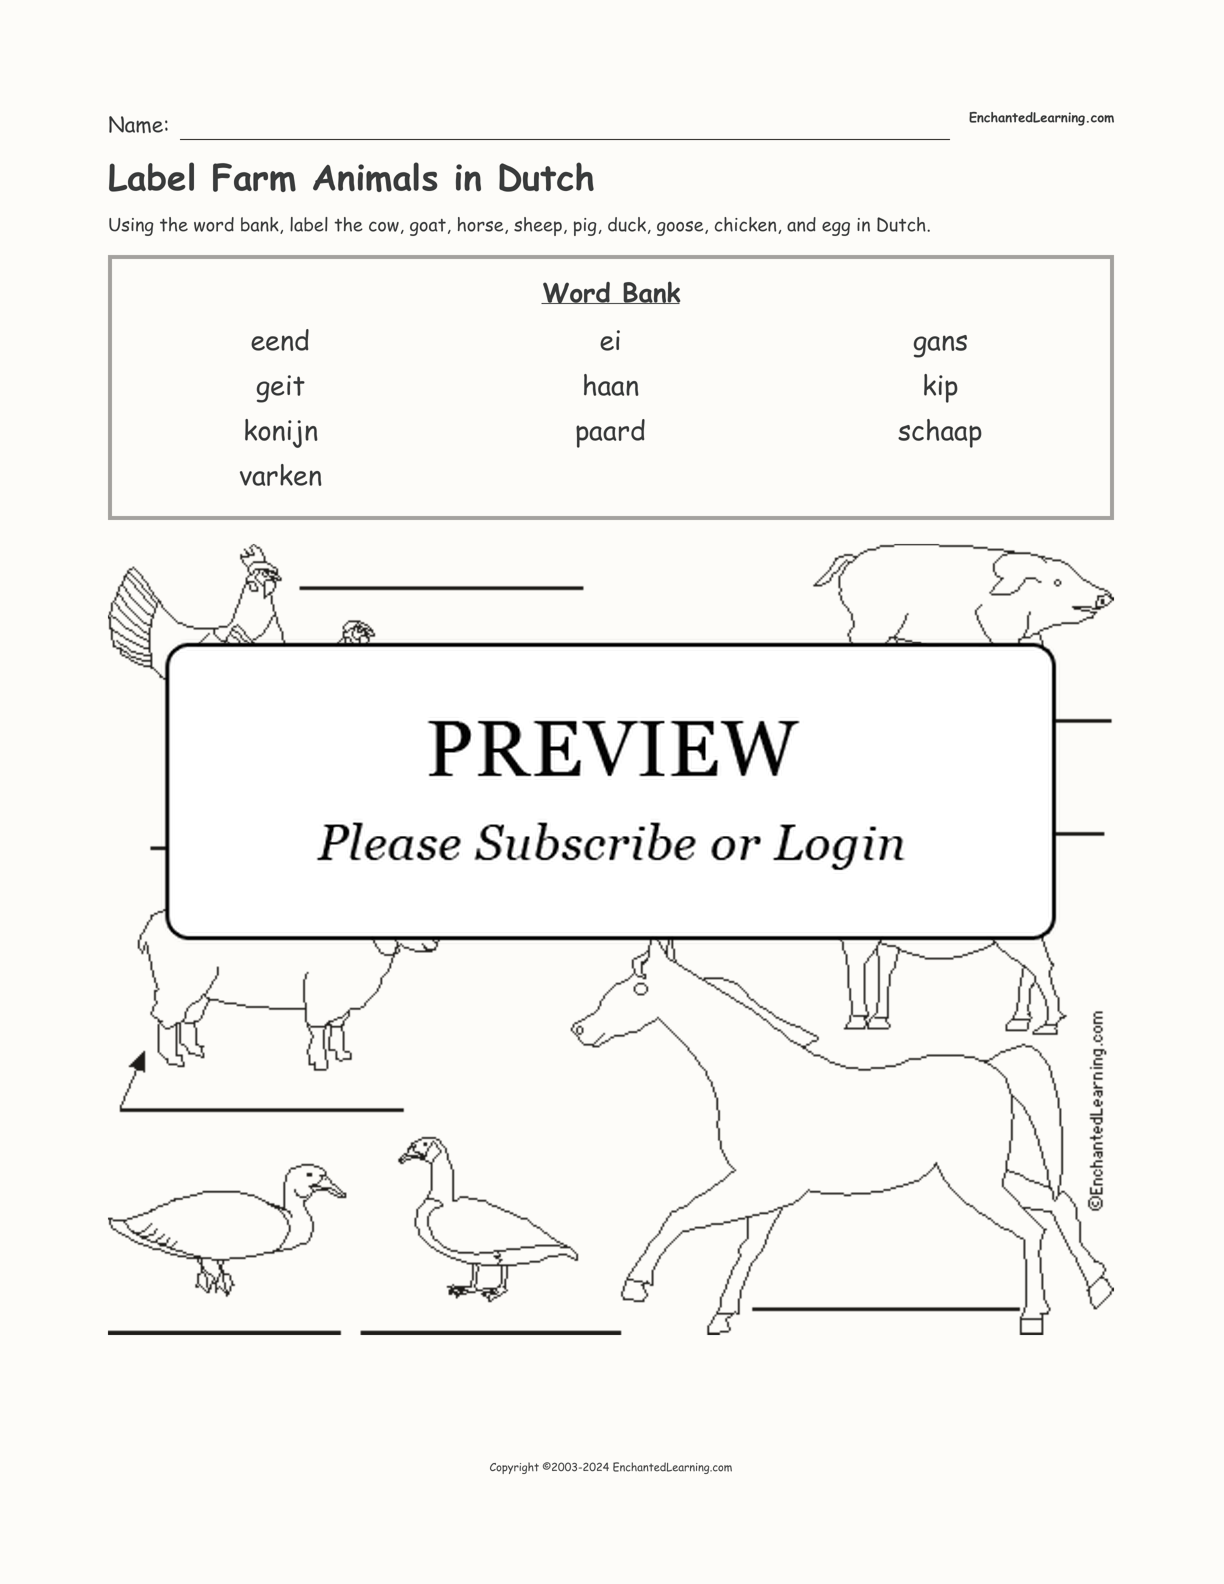 Label Farm Animals in Dutch interactive worksheet page 1